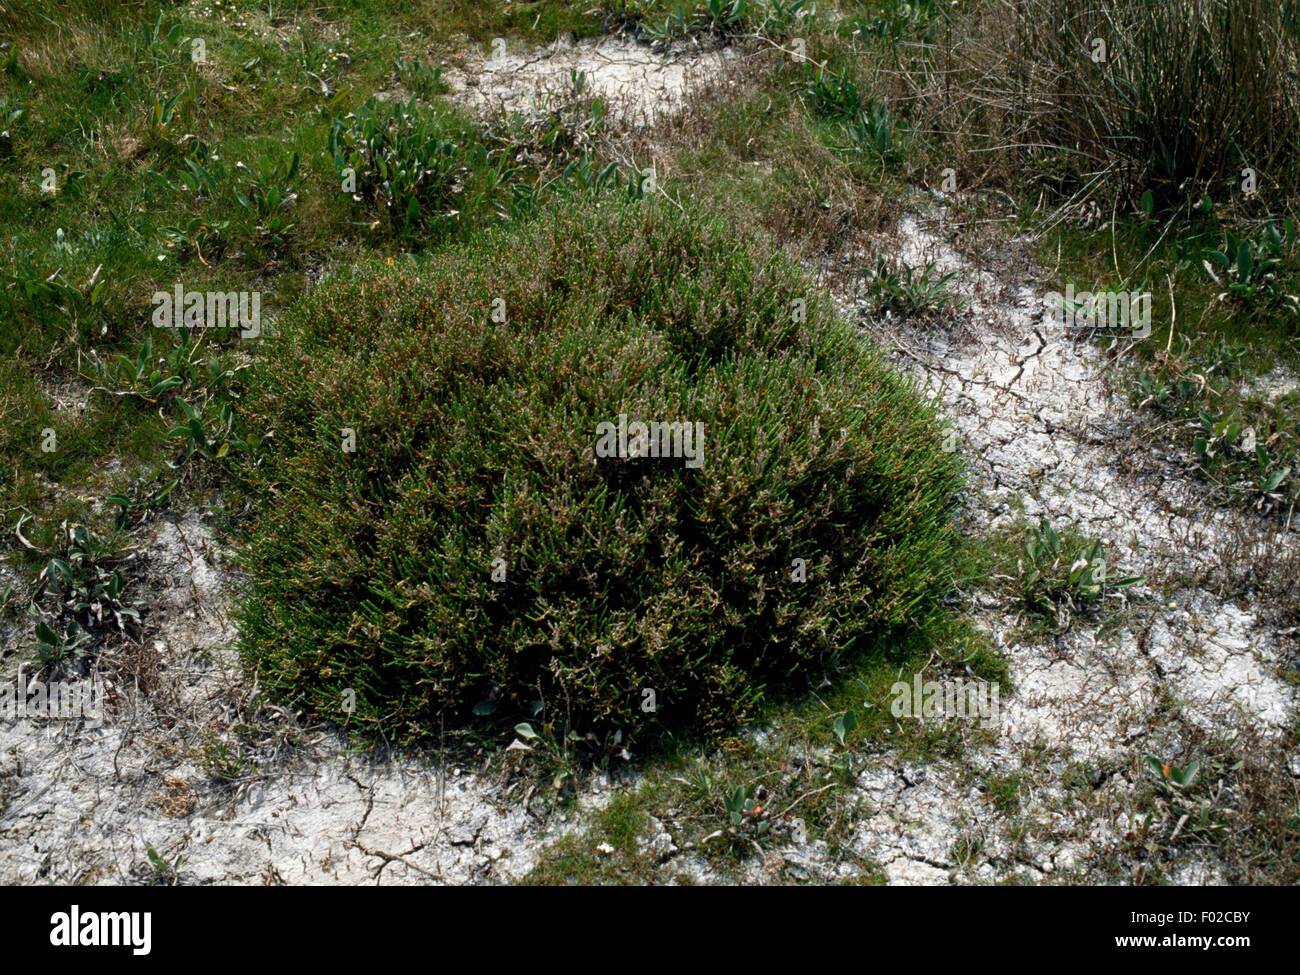 Salicornia fruticosa, Regional Nature Park of the Camargue (Parc naturel regional de Camargue), Provence-Alpes-Cote d'Azur, France. Stock Photo